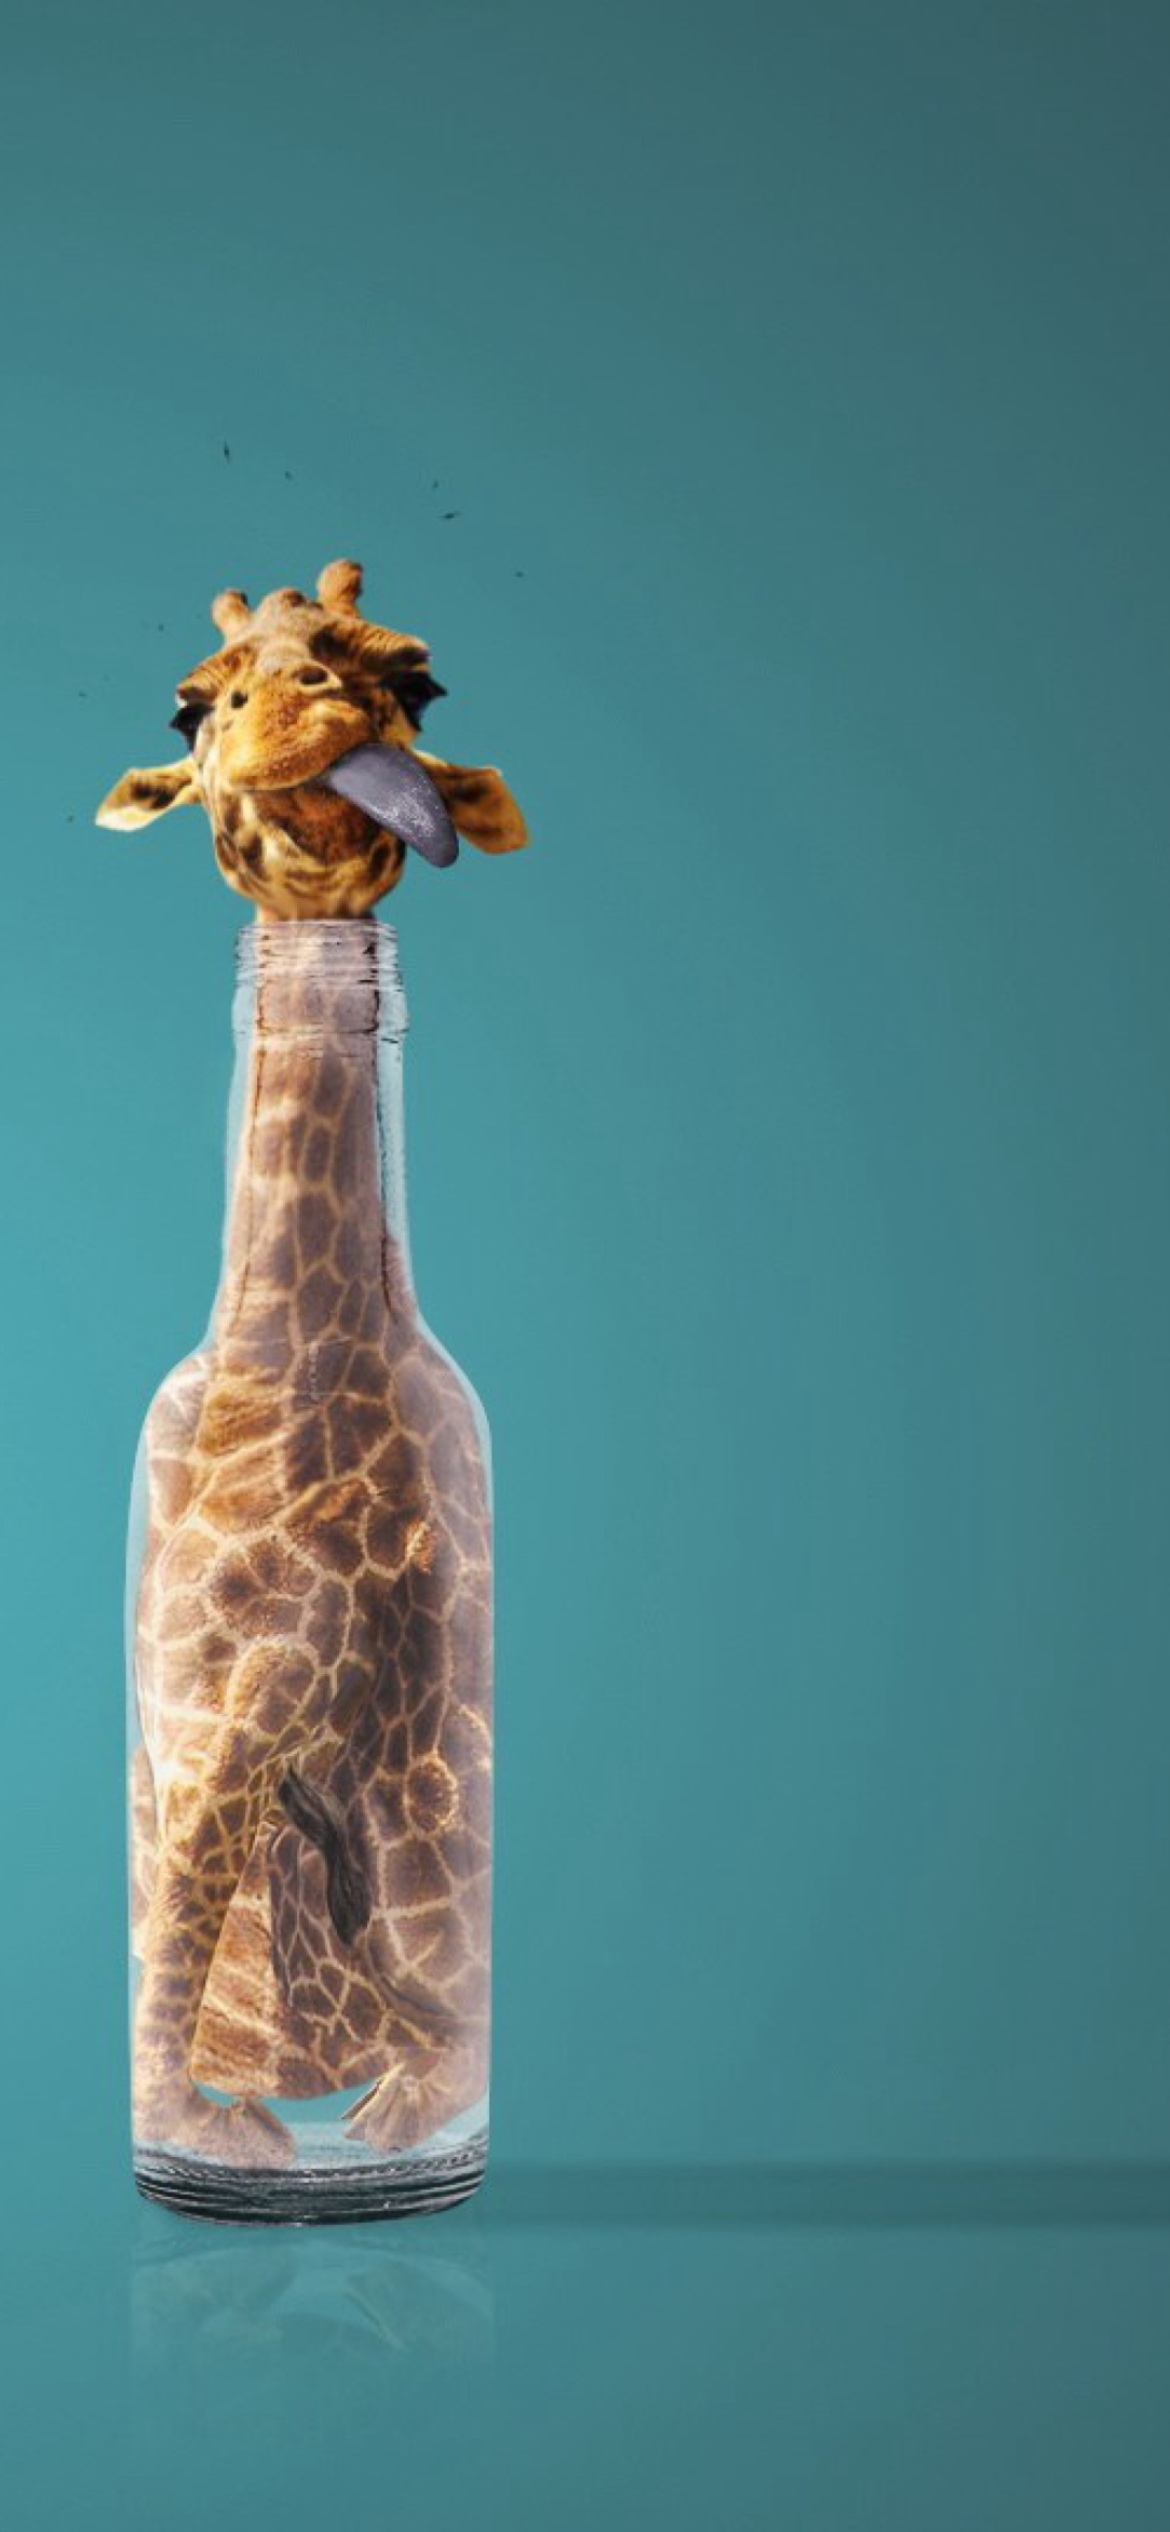 Das Giraffe In Bottle Wallpaper 1170x2532